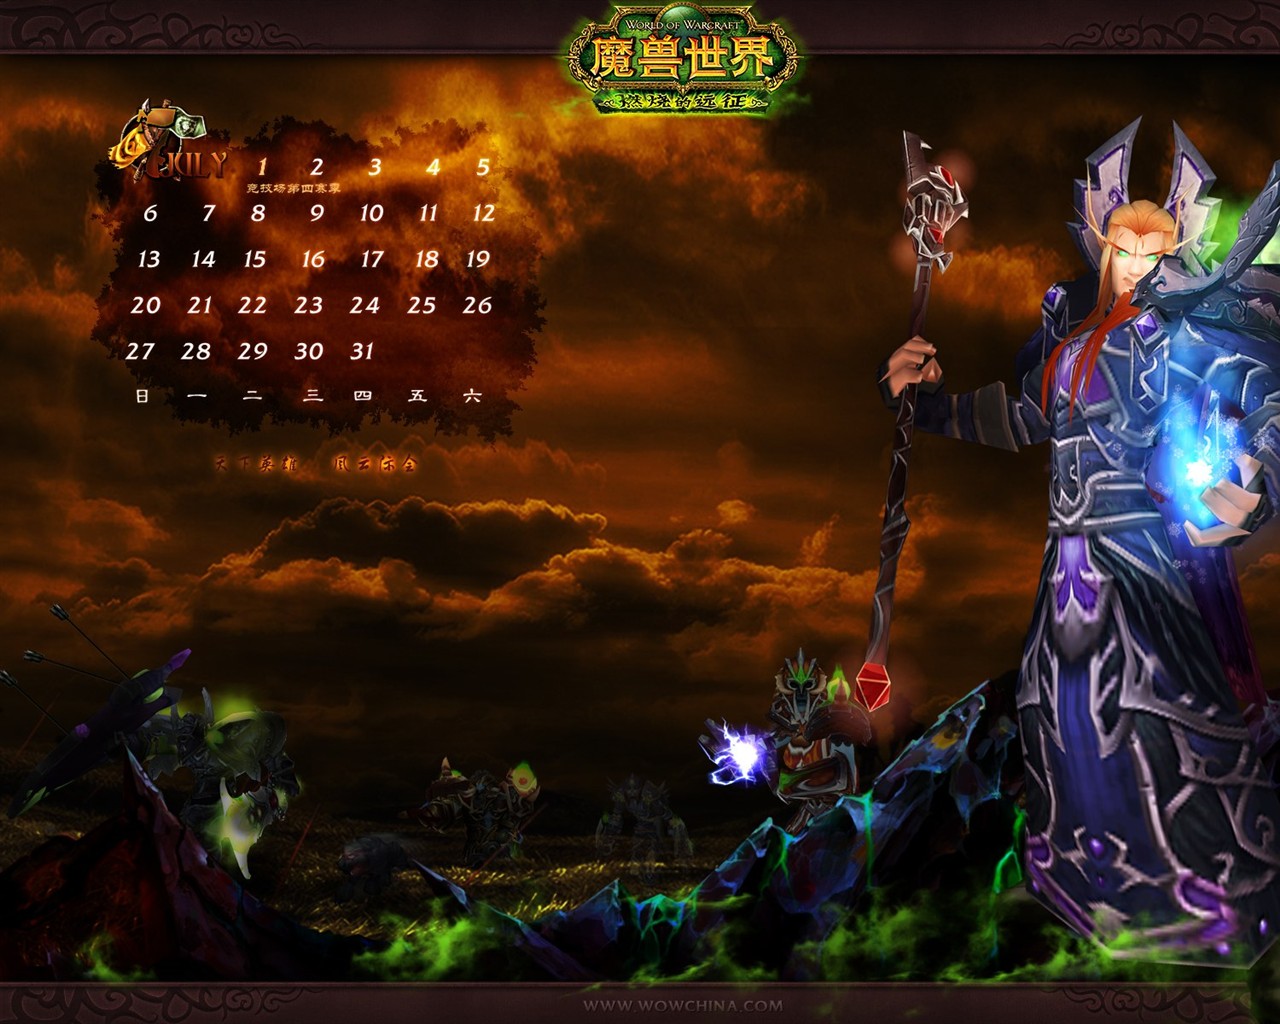 World of Warcraft: Fond d'écran officiel de Burning Crusade (2) #26 - 1280x1024